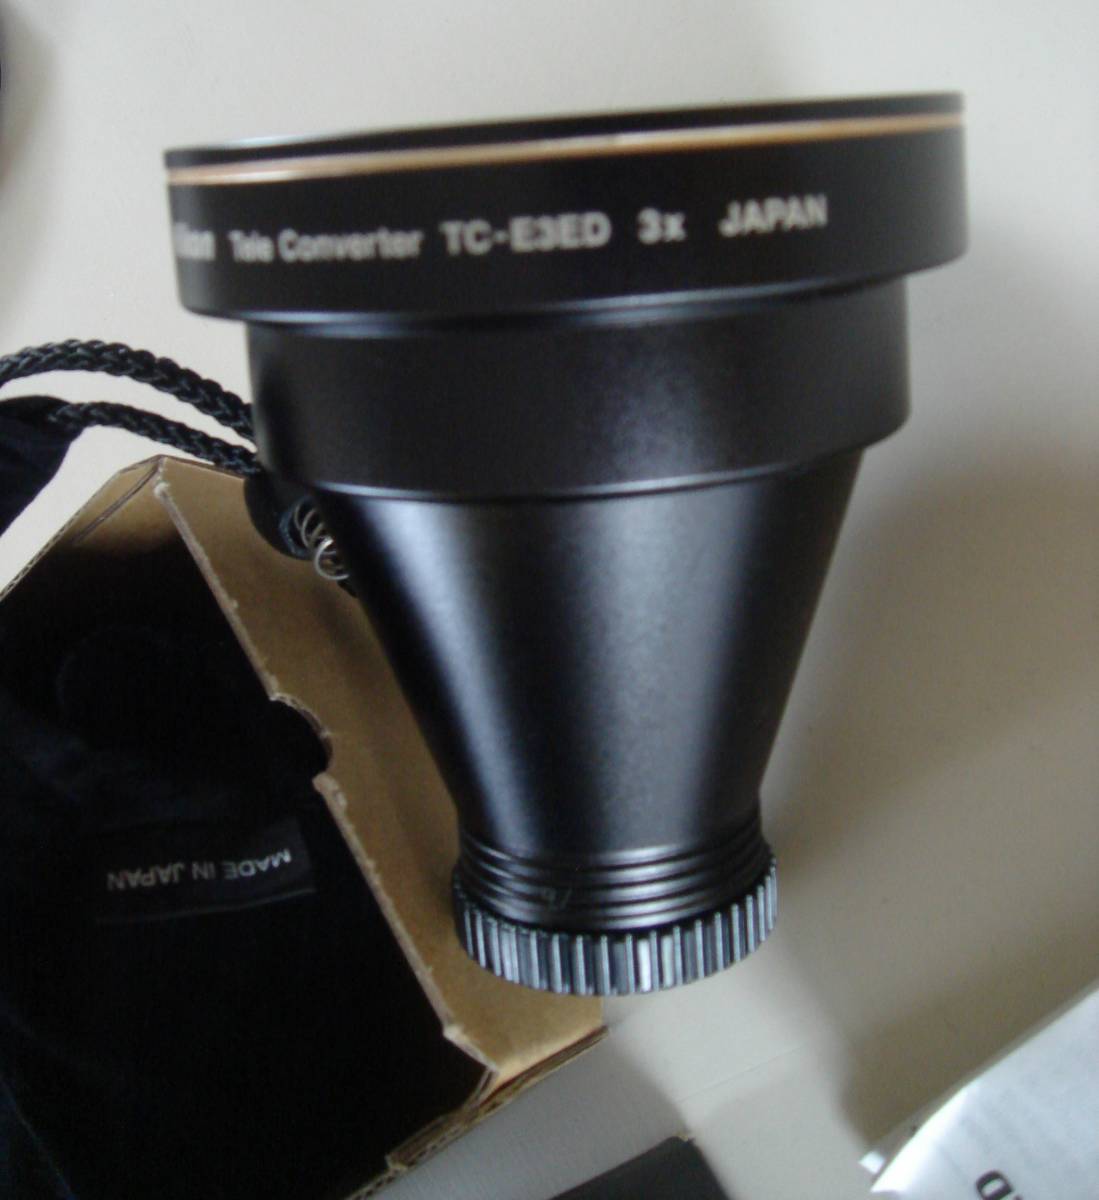  unused Nikon TC-E3 ED Telephoto Convertertere converter conversion lens exchange lens for accessory 